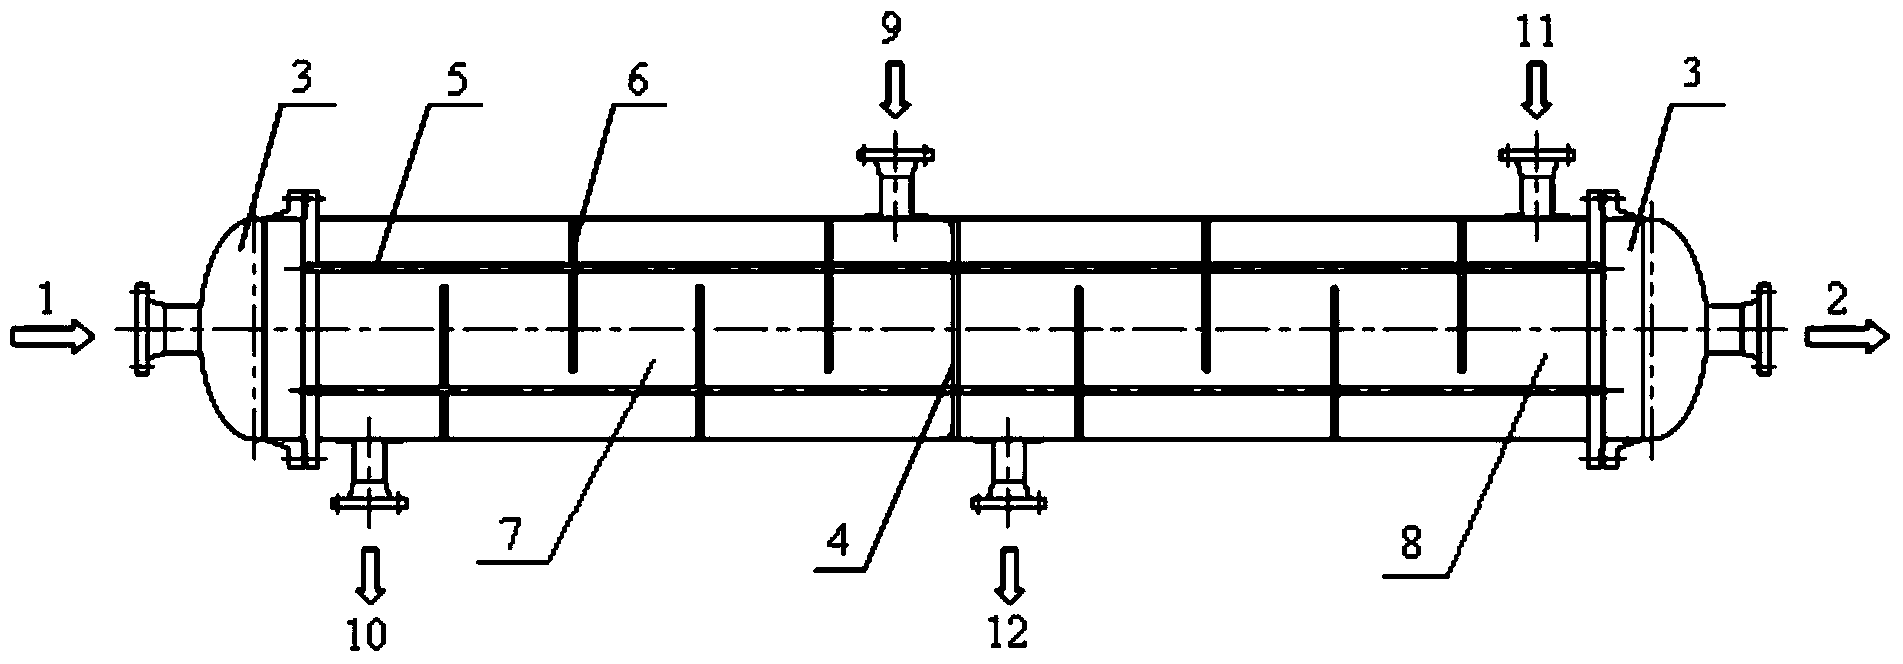 Multi-shell-pass tube type heat exchanger